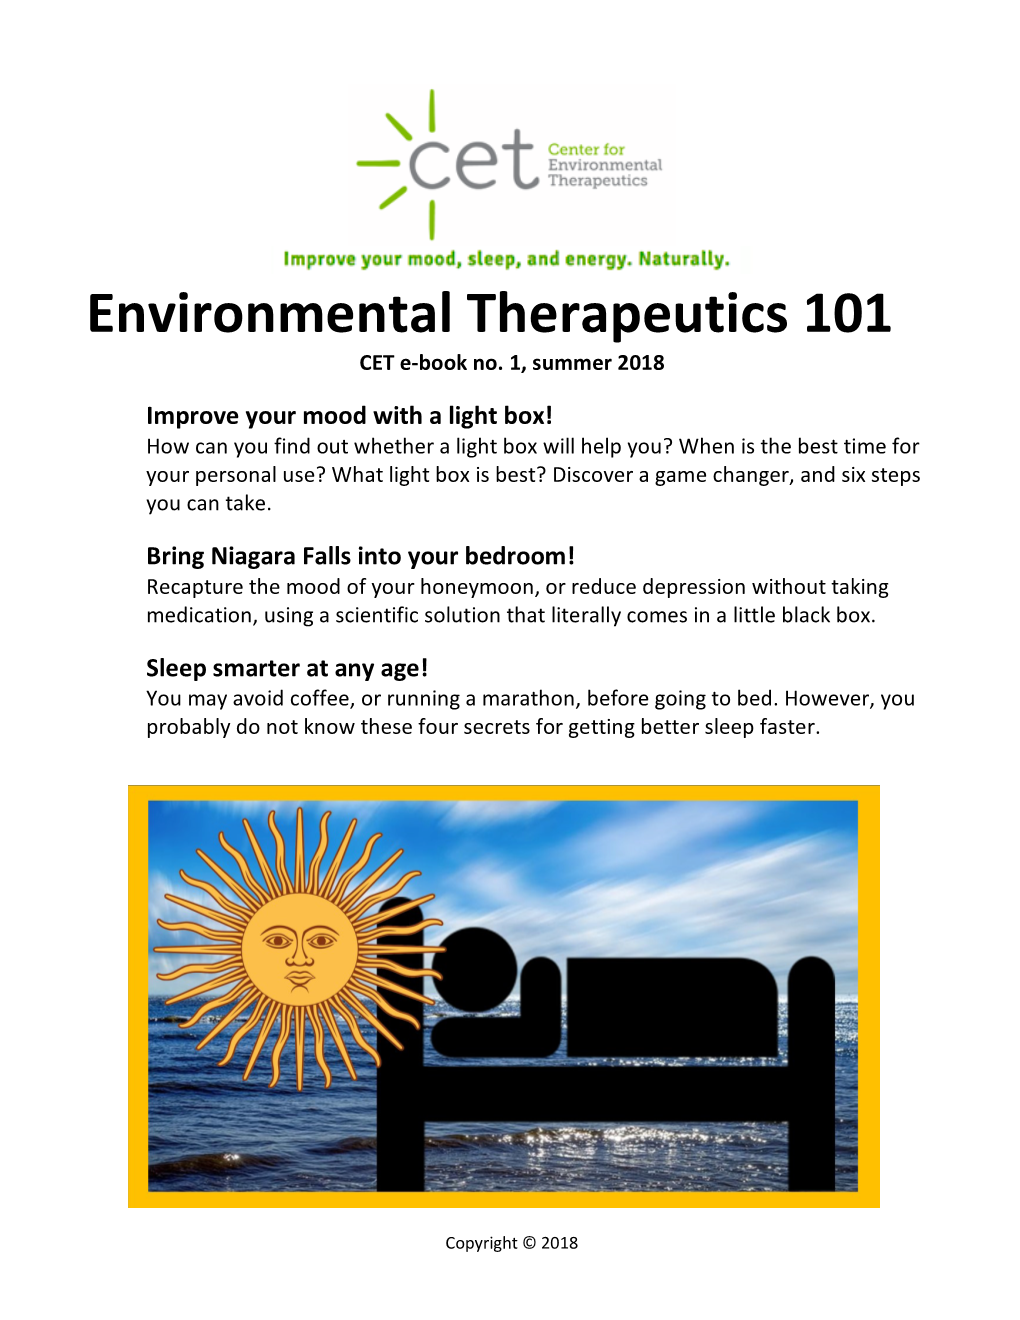 Environmental Therapeutics 101 CET E-Book No